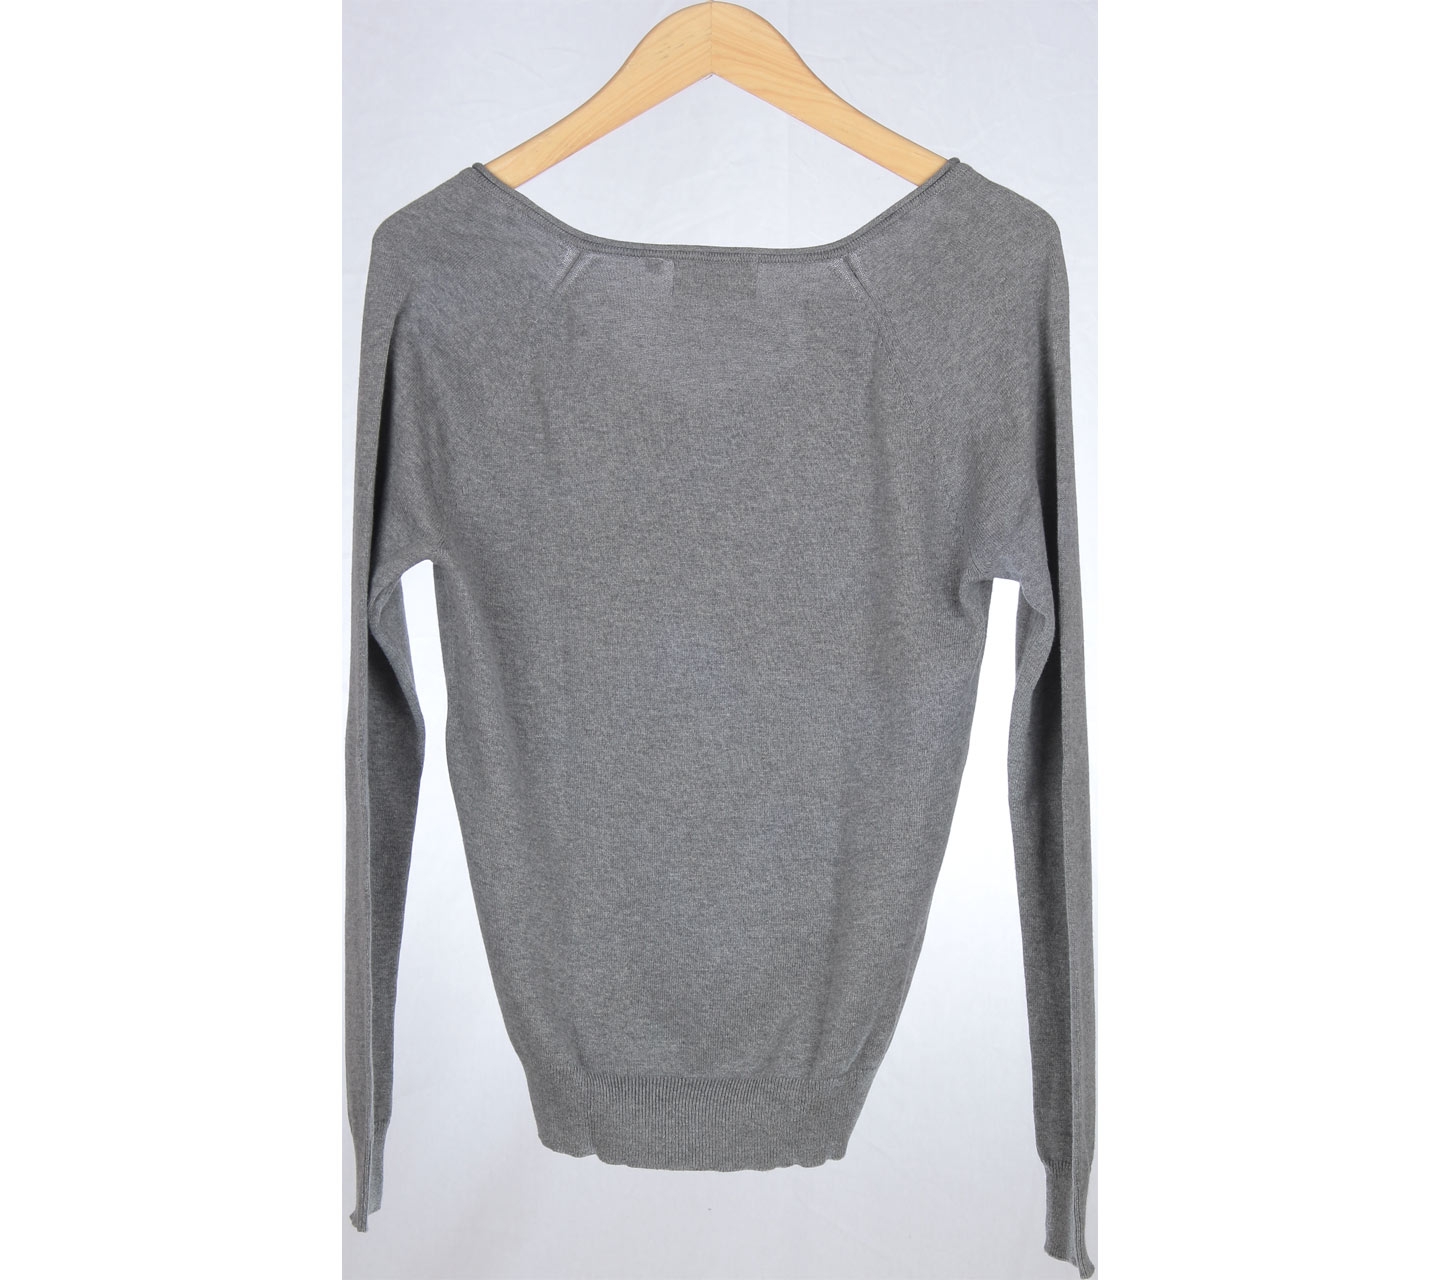 C&A Grey Sweater